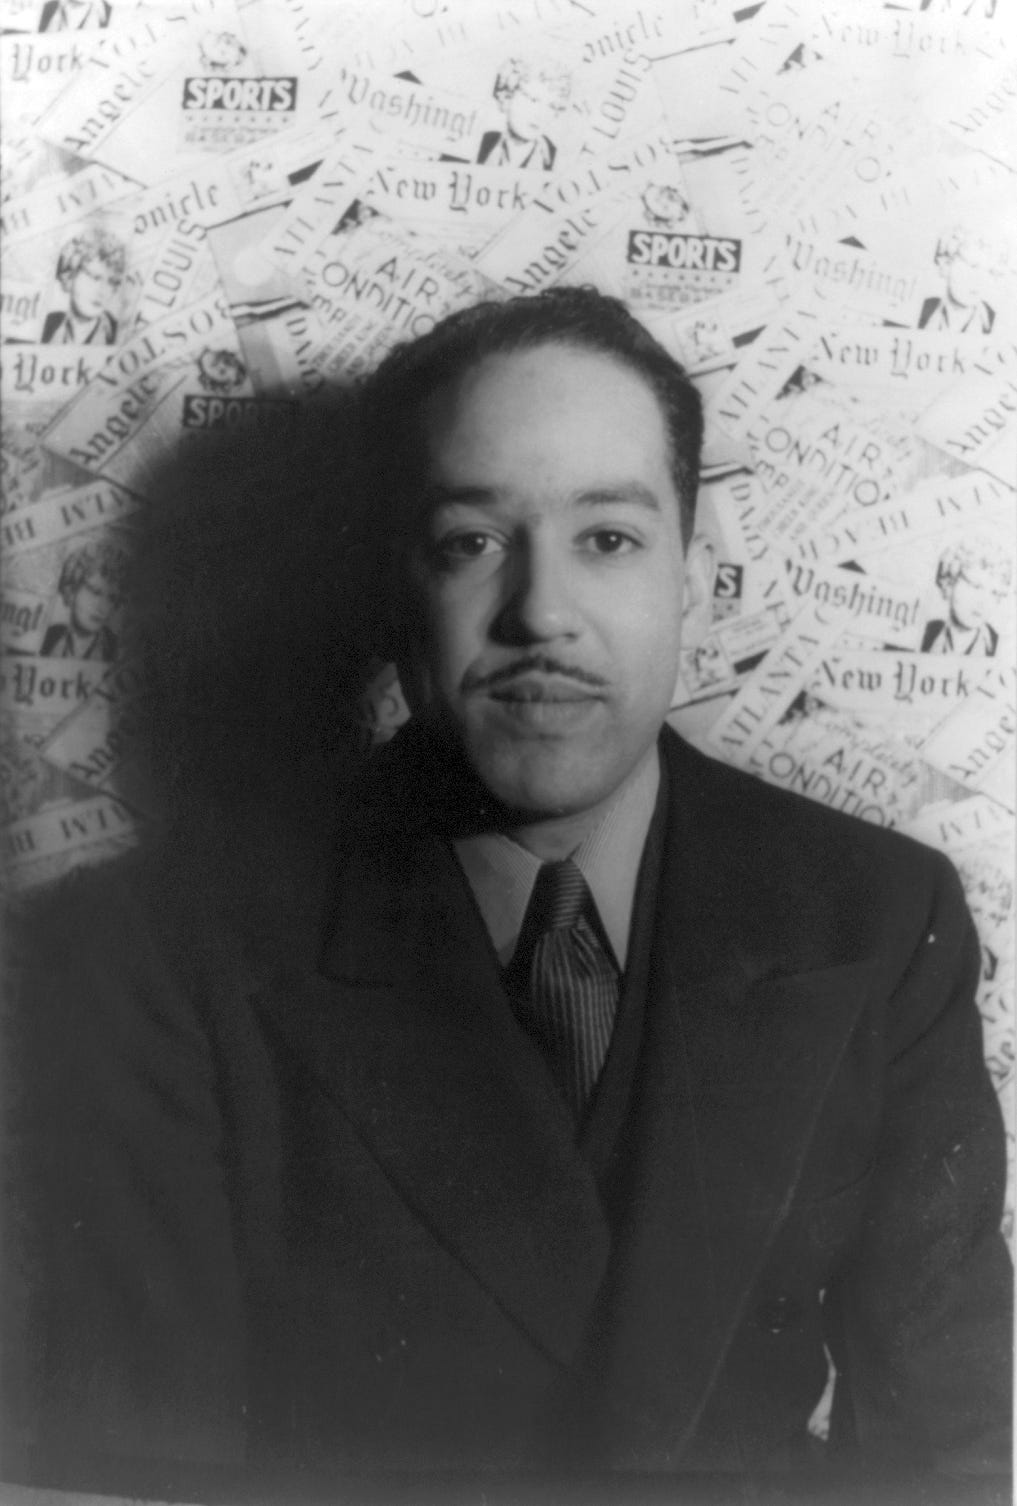 File:Langston Hughes by Carl Van Vechten 1936.jpg - Wikipedia